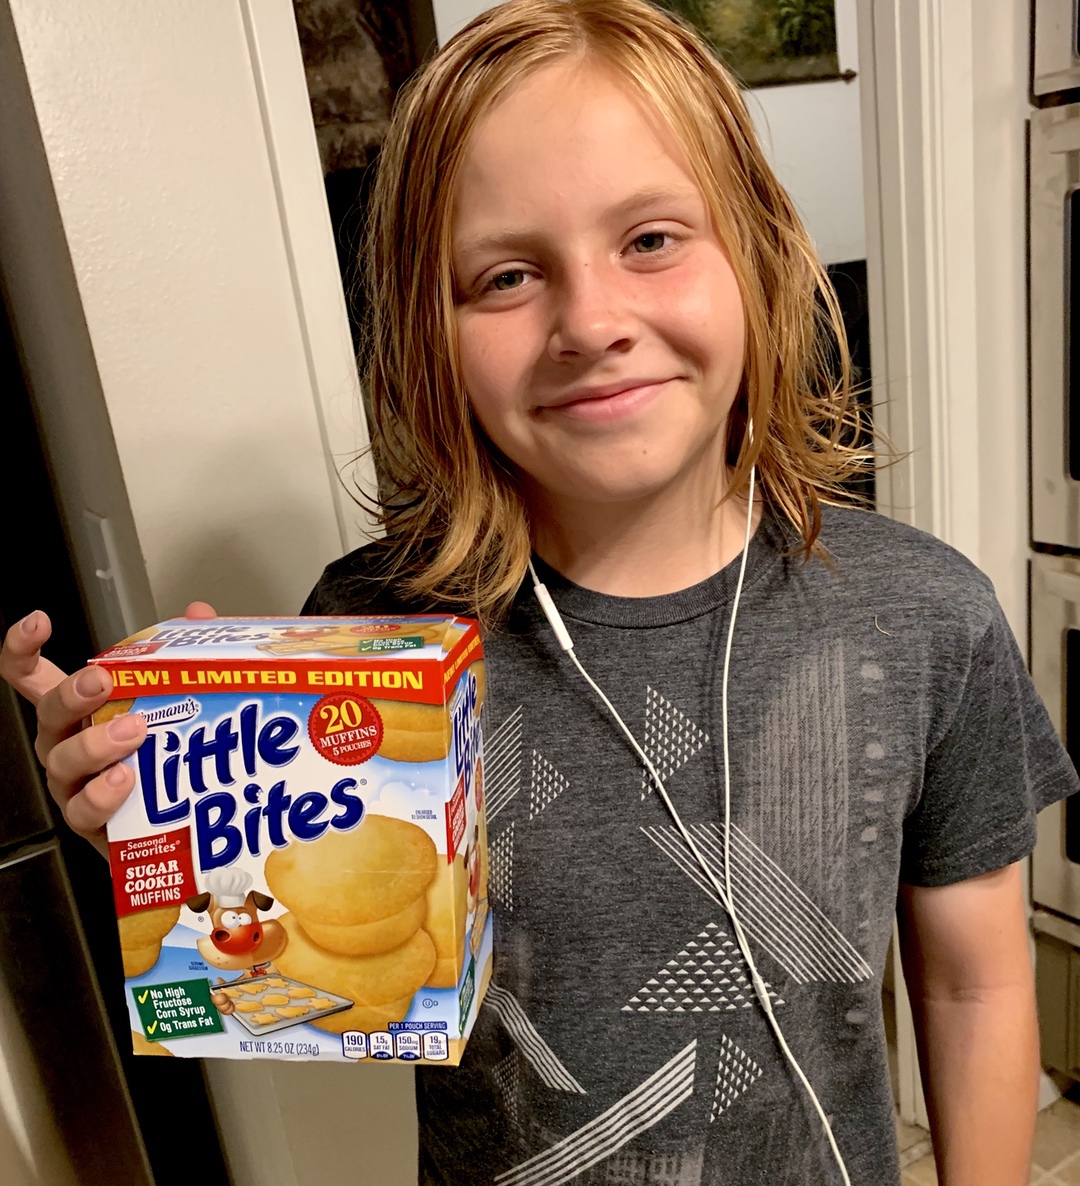 Entenmann's Little Bites Sugar Cookie Muffins #Entenmanns #LittleBites #Muffins #snacks #food #foodie #holidays #giveaway #LoveLittleBites #LBSugarCookie #ad